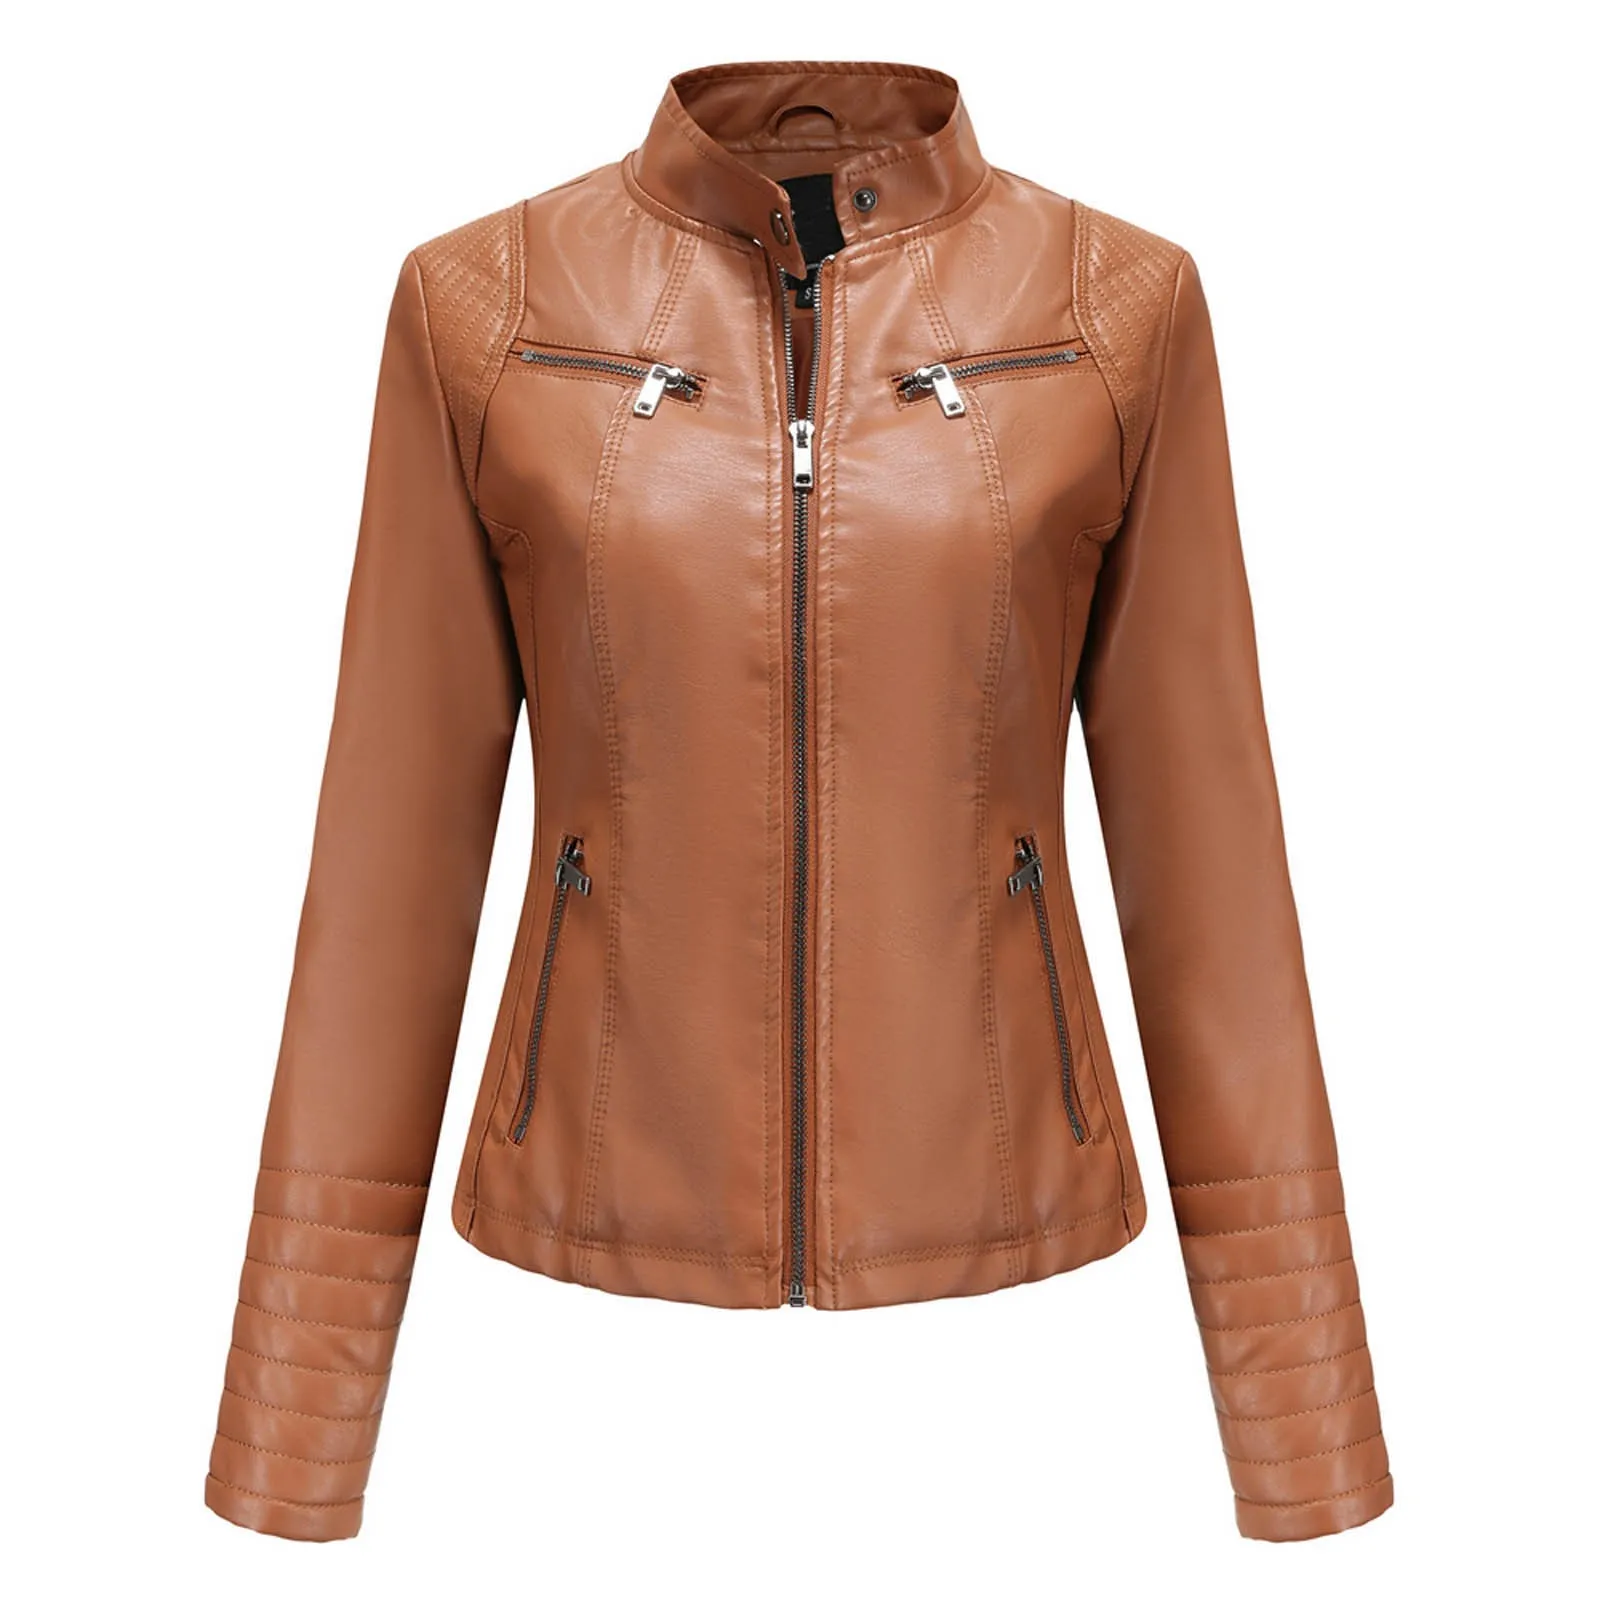 Mode Frauen Solide Farben Slim-Fit Langarm Leder Stehkragen Zipper Motorrad Anzug Dünne Mantel Jacke Oberbekleidung # g3